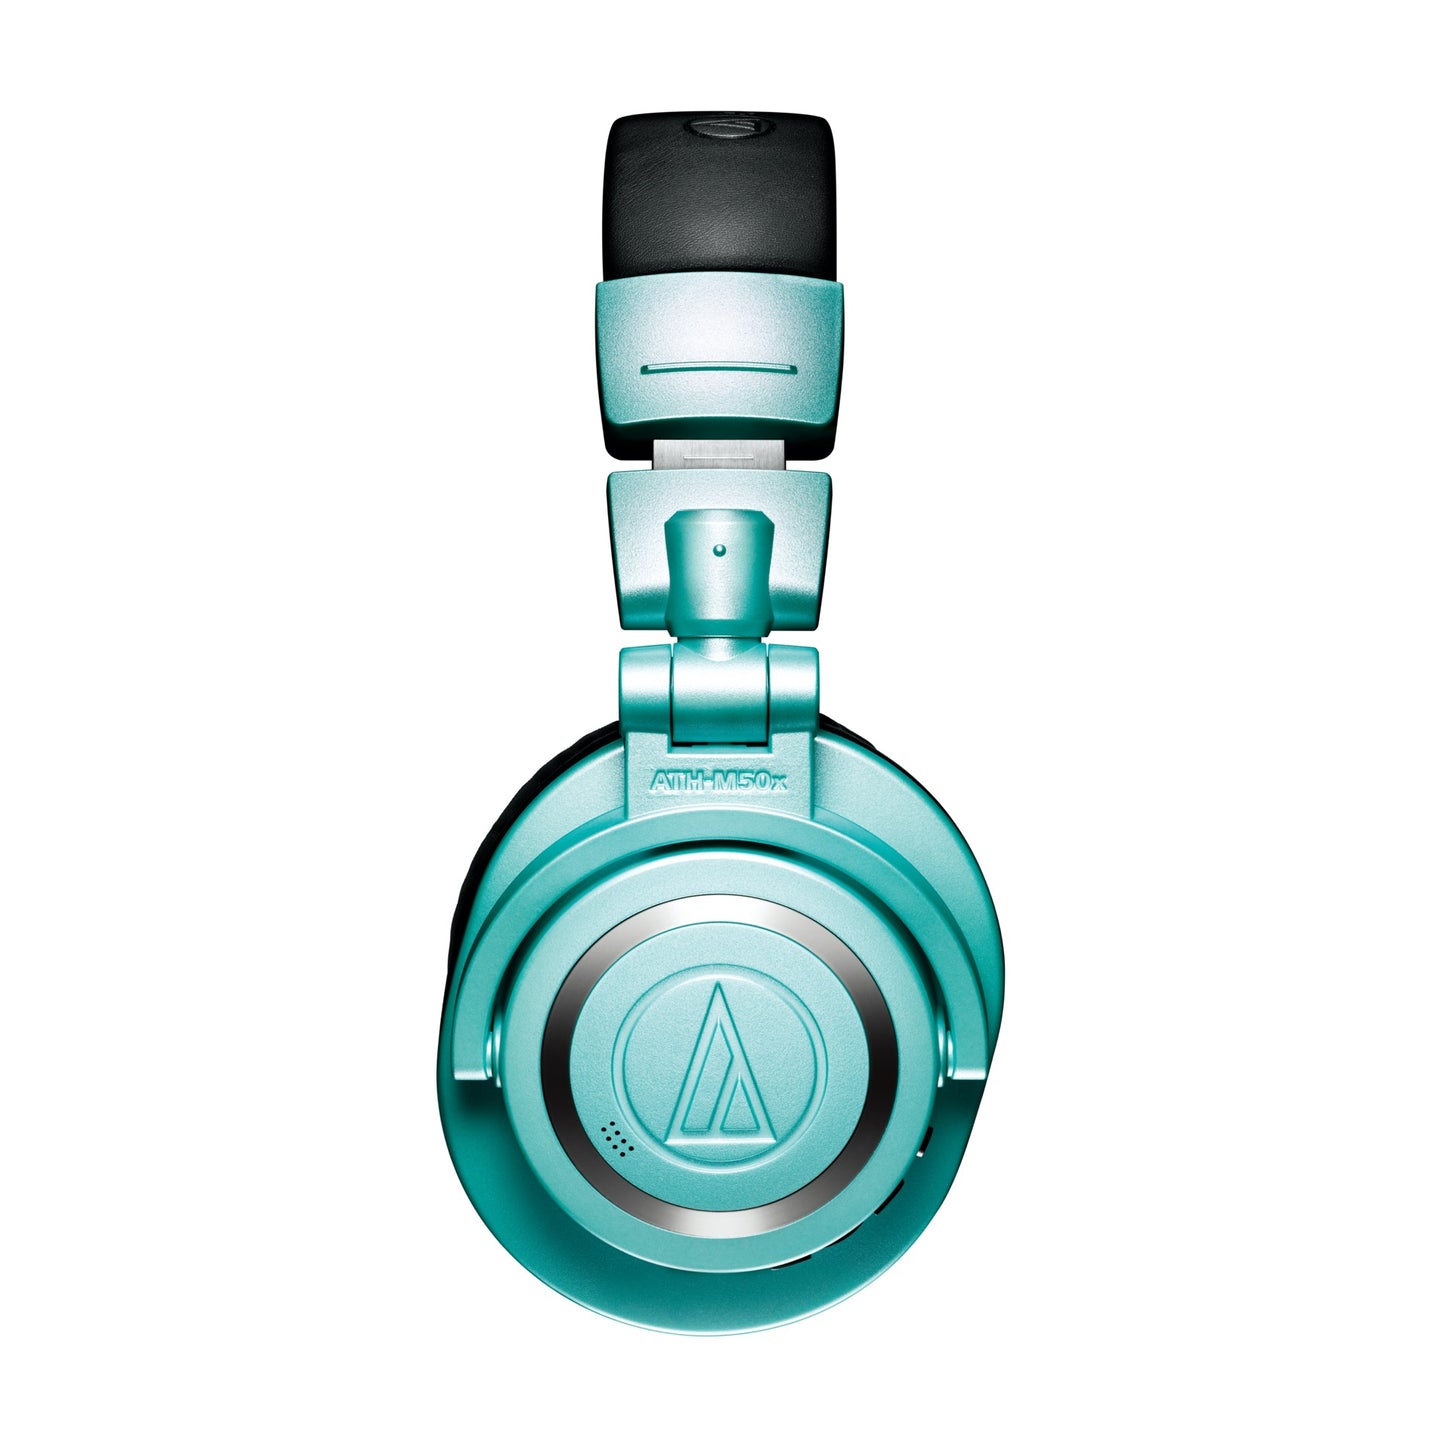 Audio Technica ATH-M50XBT2IB Bluetooth Headphones - Limited Edition Ice Blue